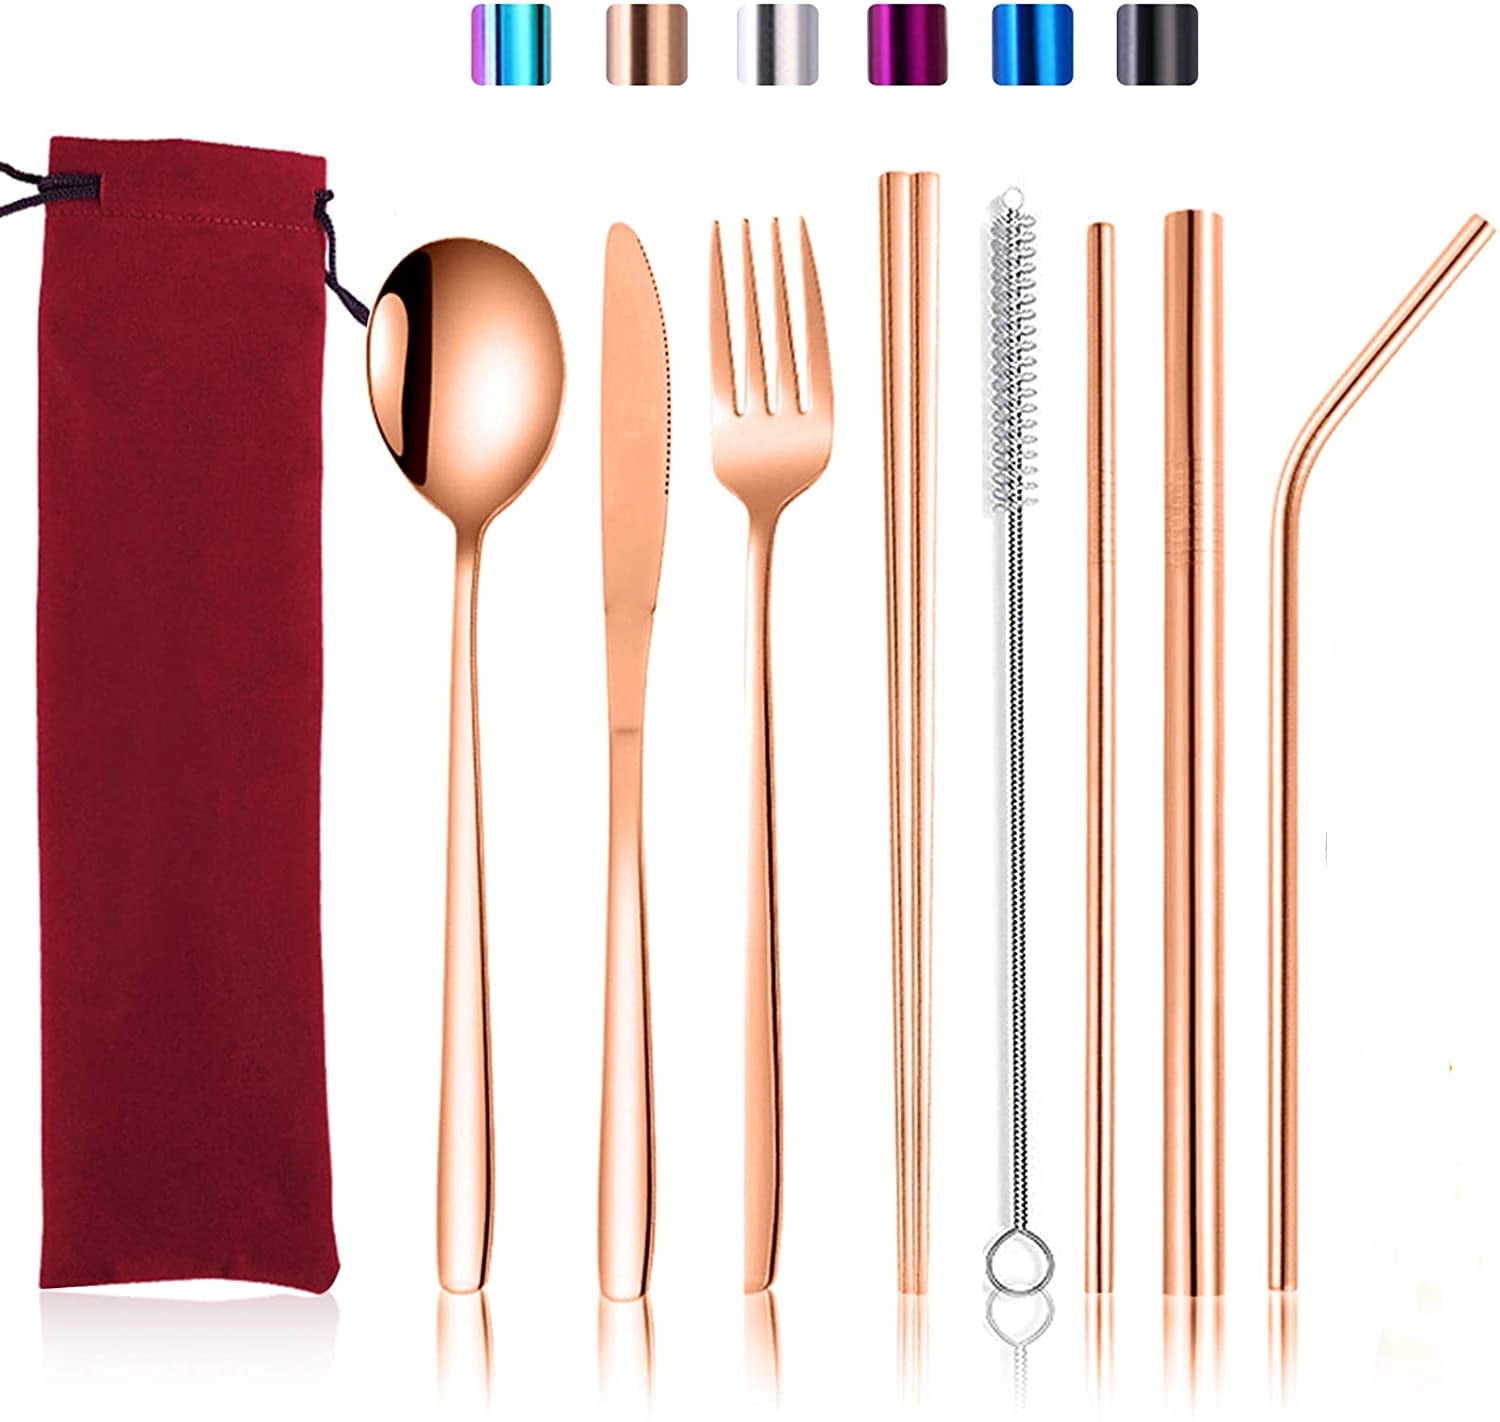 Portable Utensils  Camping Cutlery Set Stainless Steel Fork Spoon Chopsticks 